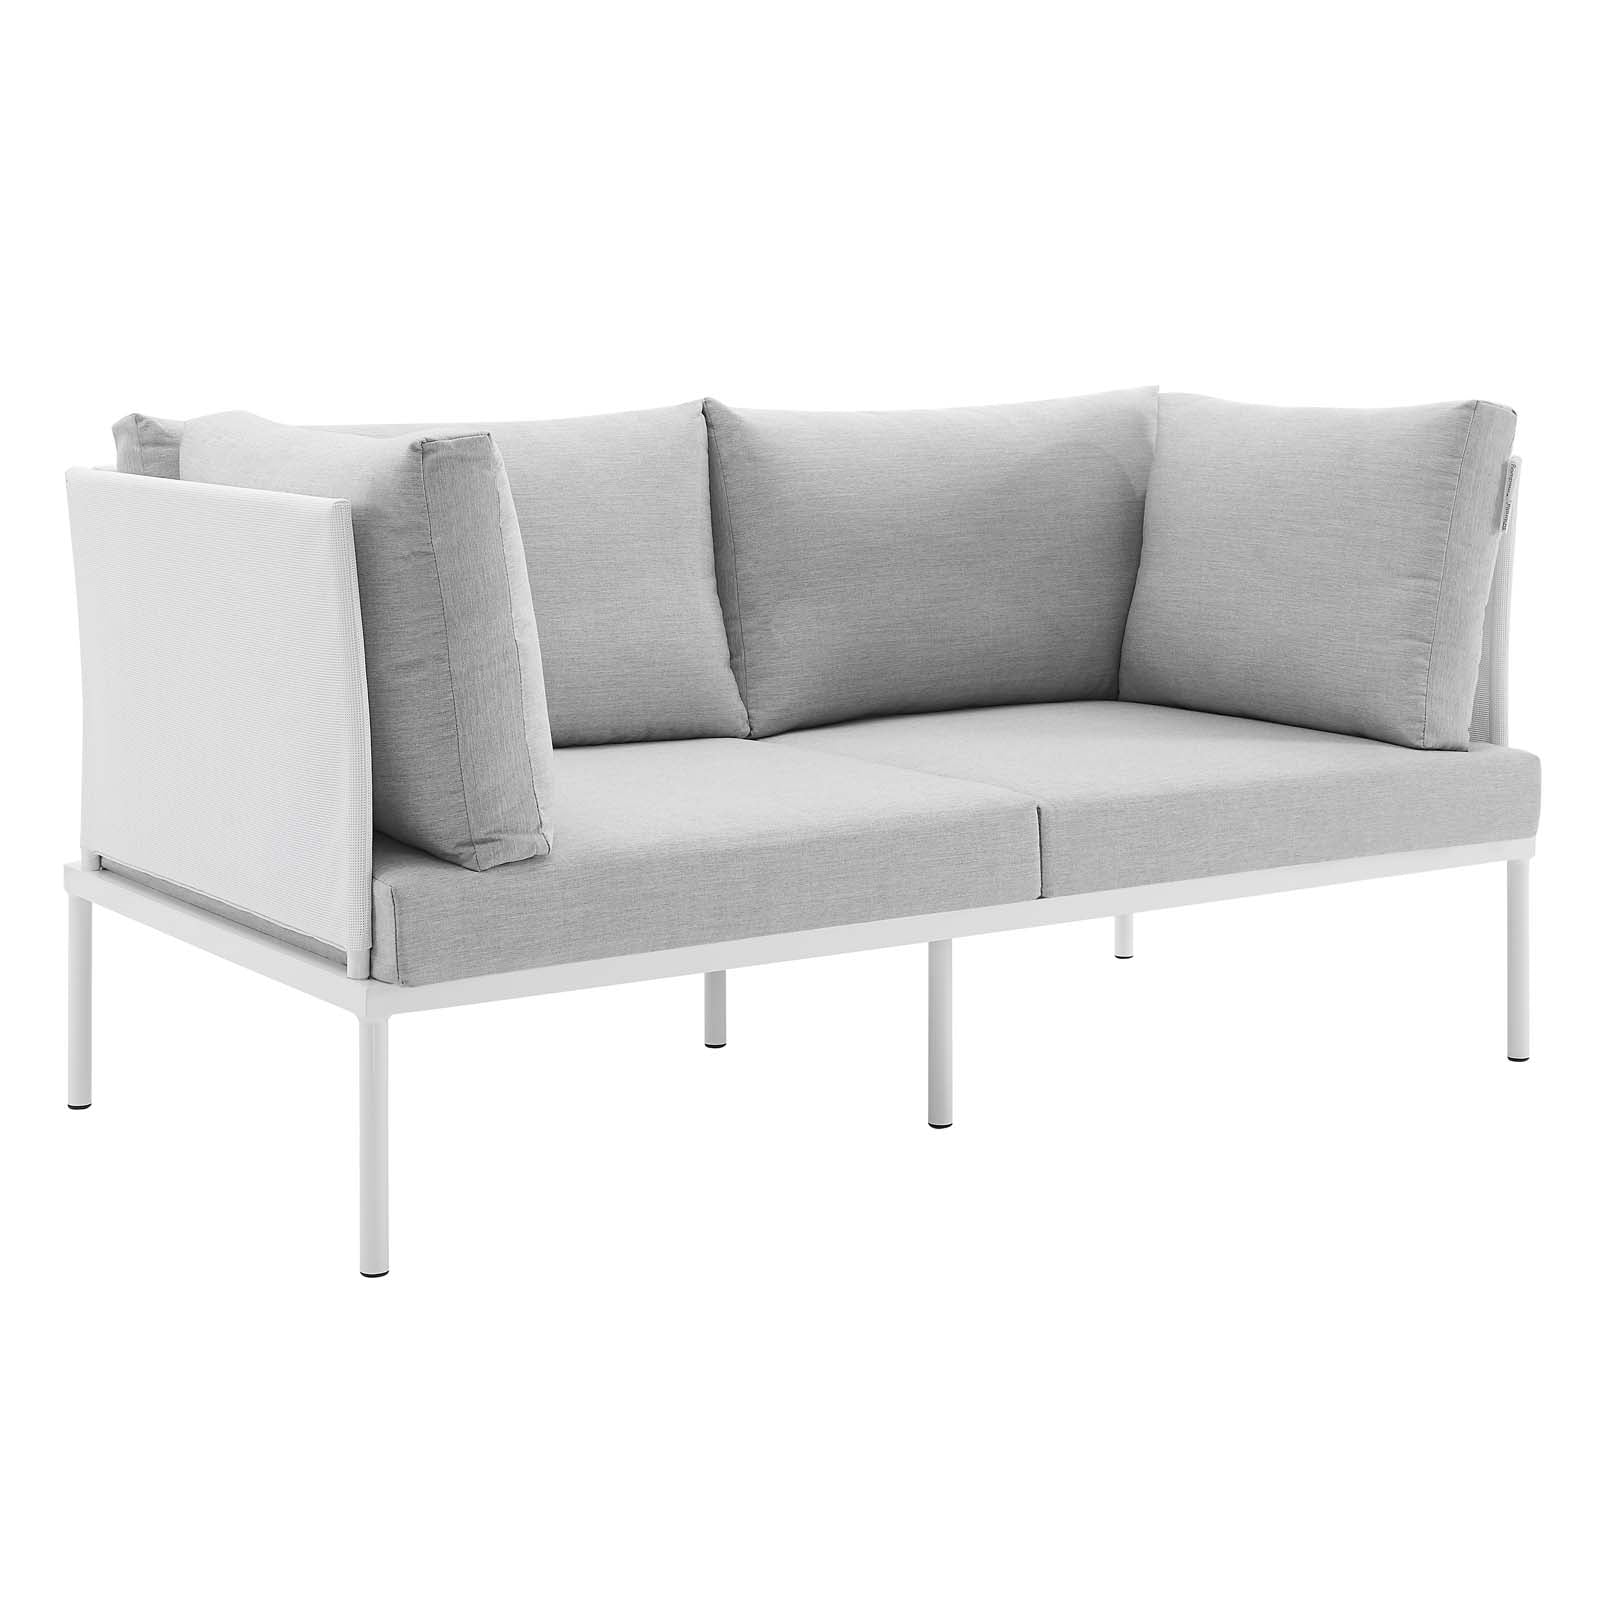 Modway Outdoor Conversation Sets - Harmony 5 Piece Sunbrella Outdoor Patio Aluminum Furniture Set White Gray